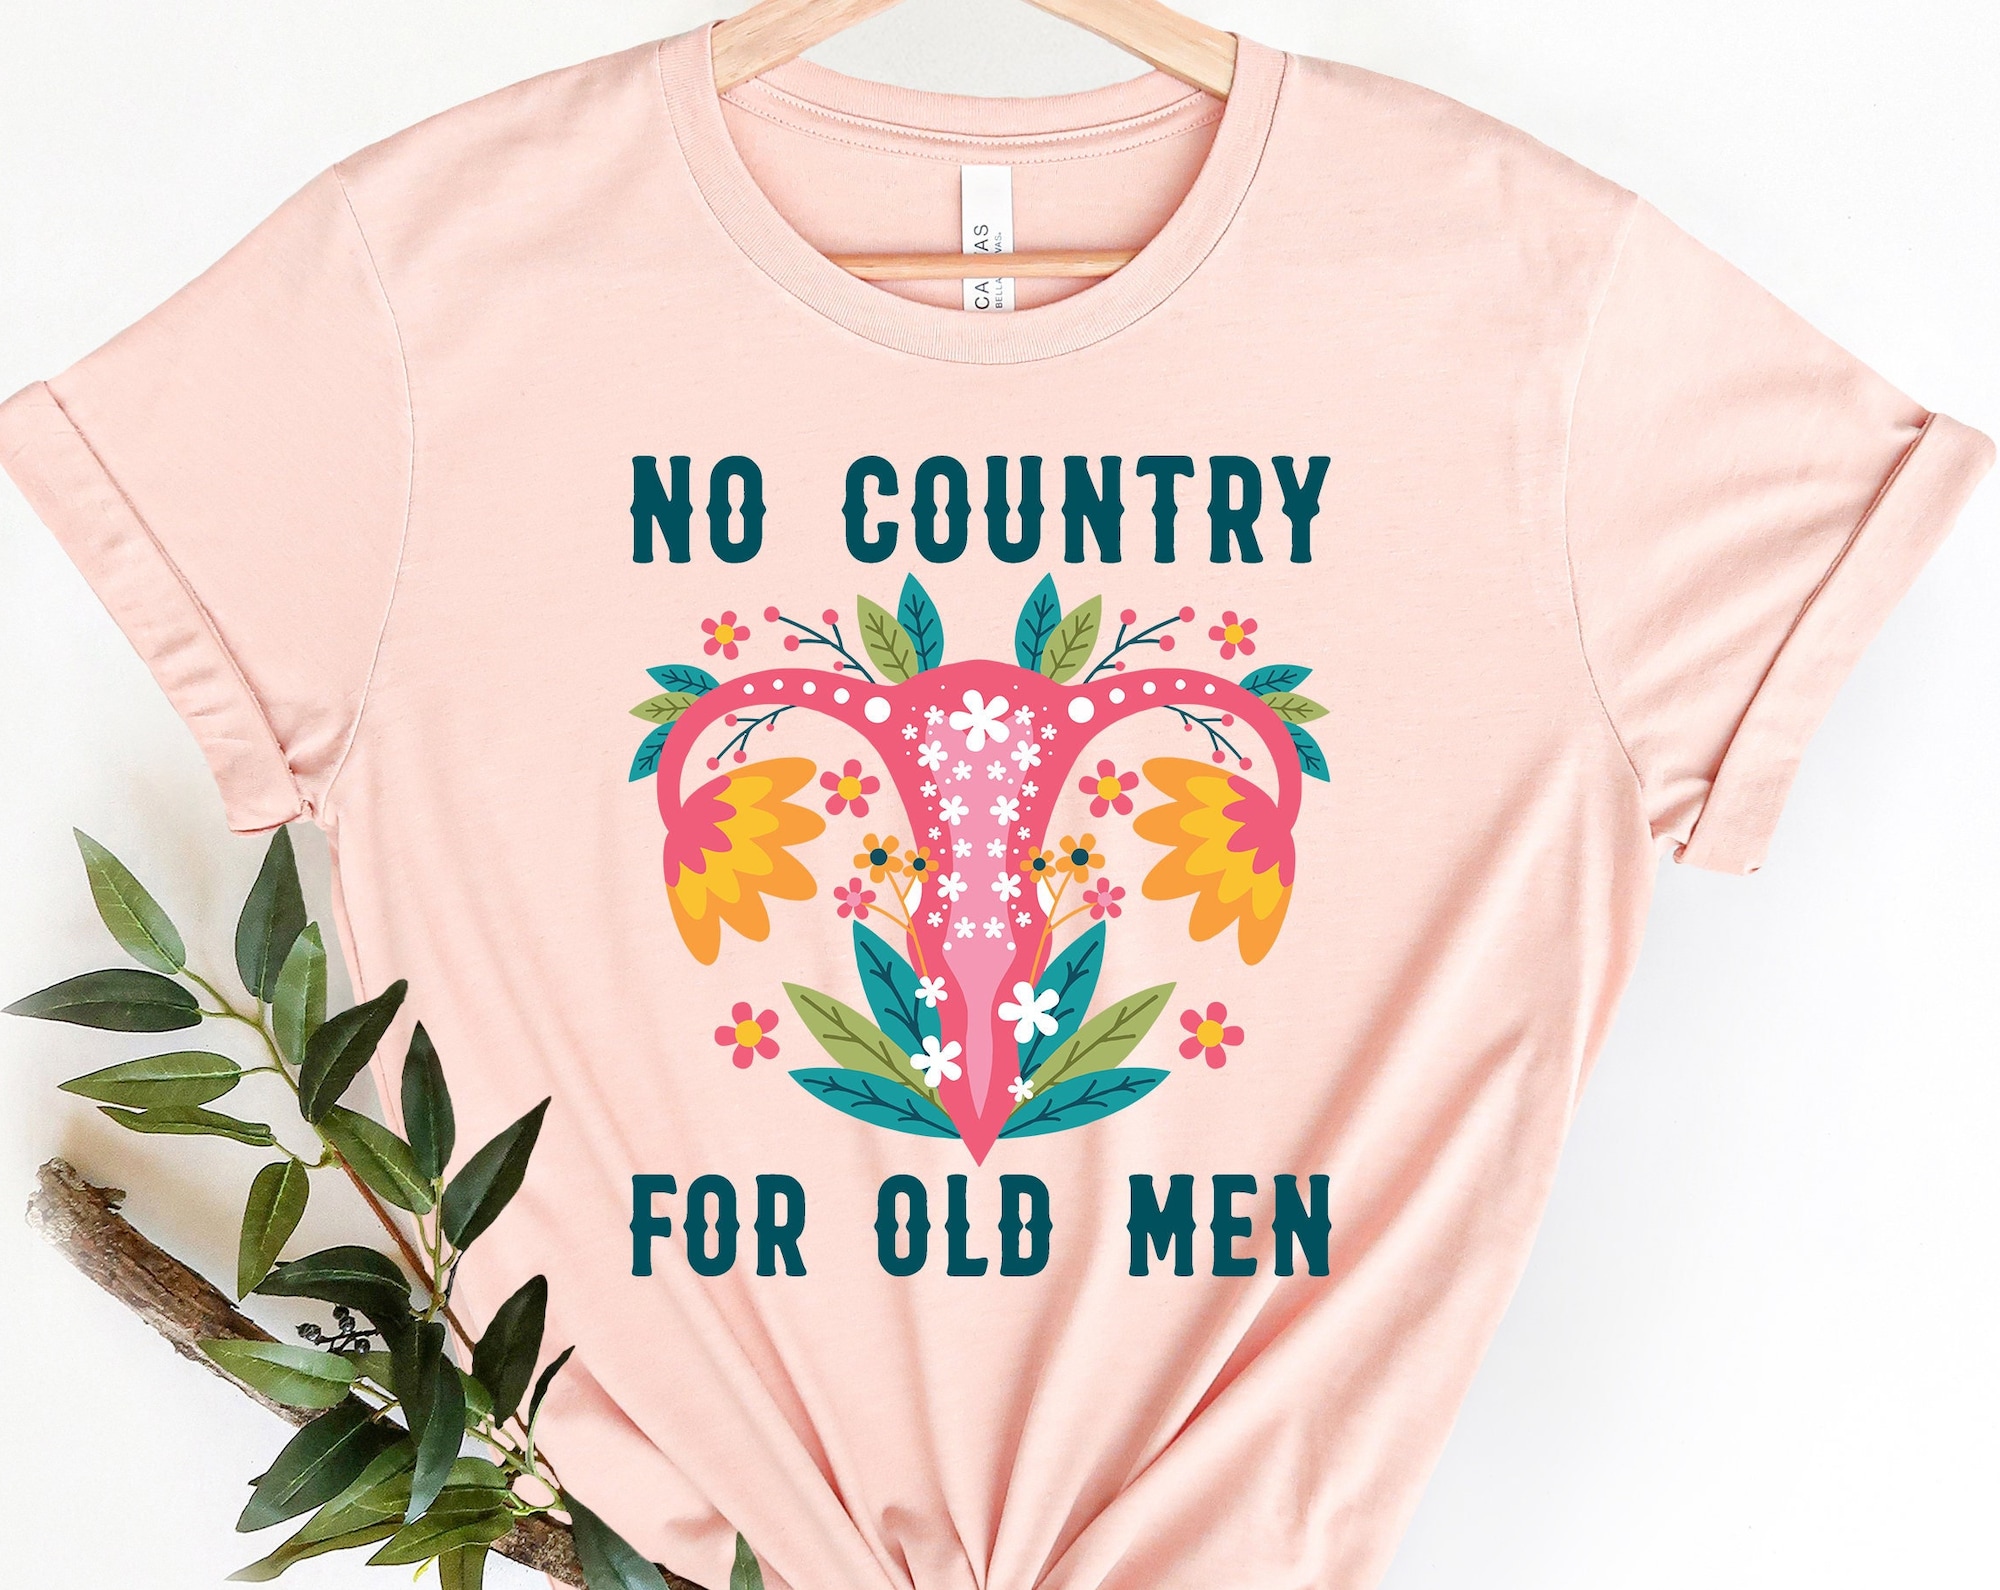 Discover No Country For Old Men | Feminist Shirt, Uterus Shirt, Abortion Shirt, Women Rights Shirt, Uterus Pro Choice Shirt, Stop Abortion Ban Shirt